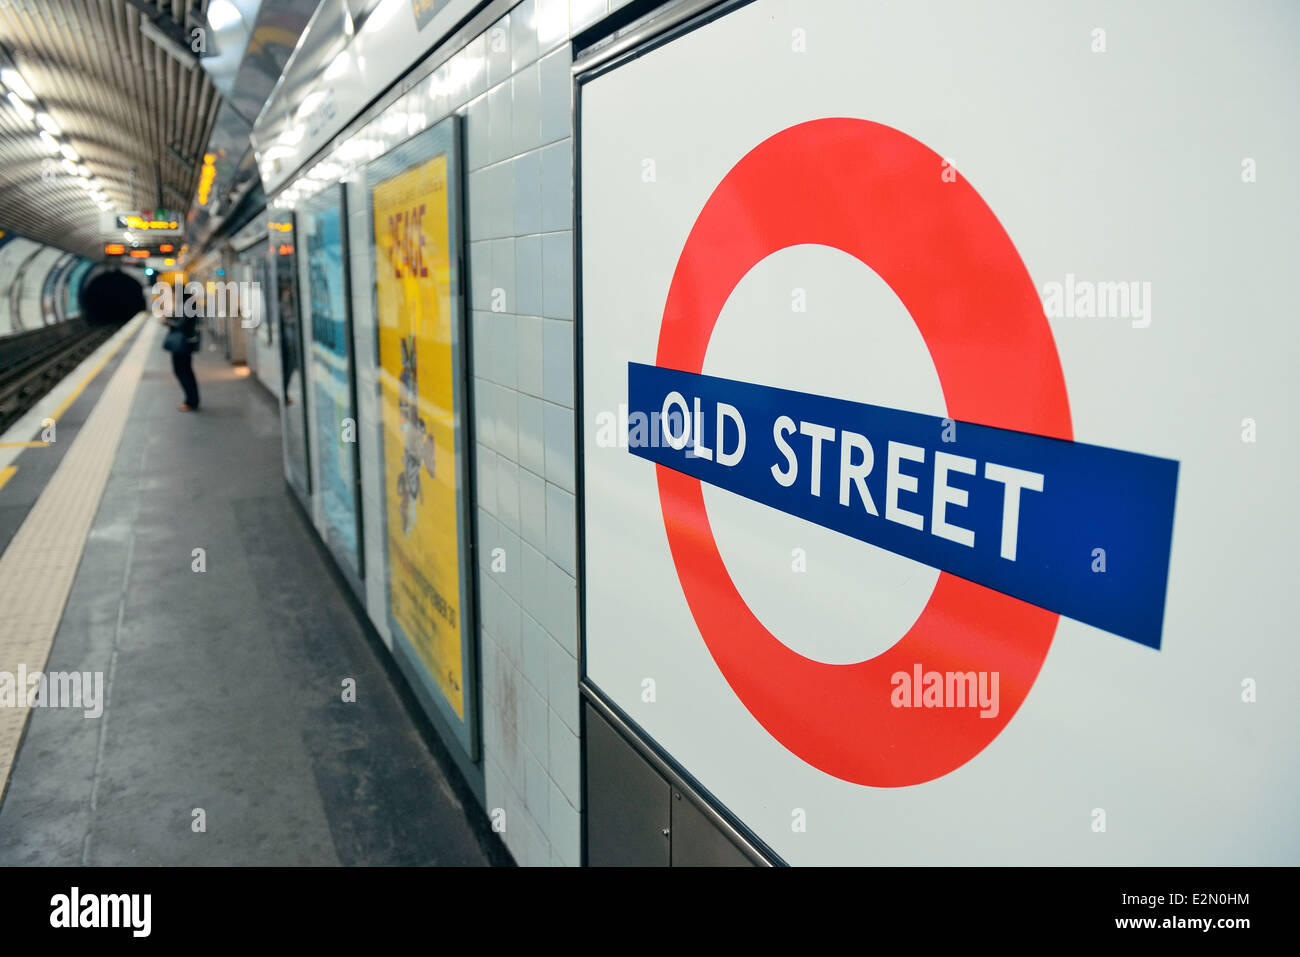 London Underground Station-Interieur Stockfoto